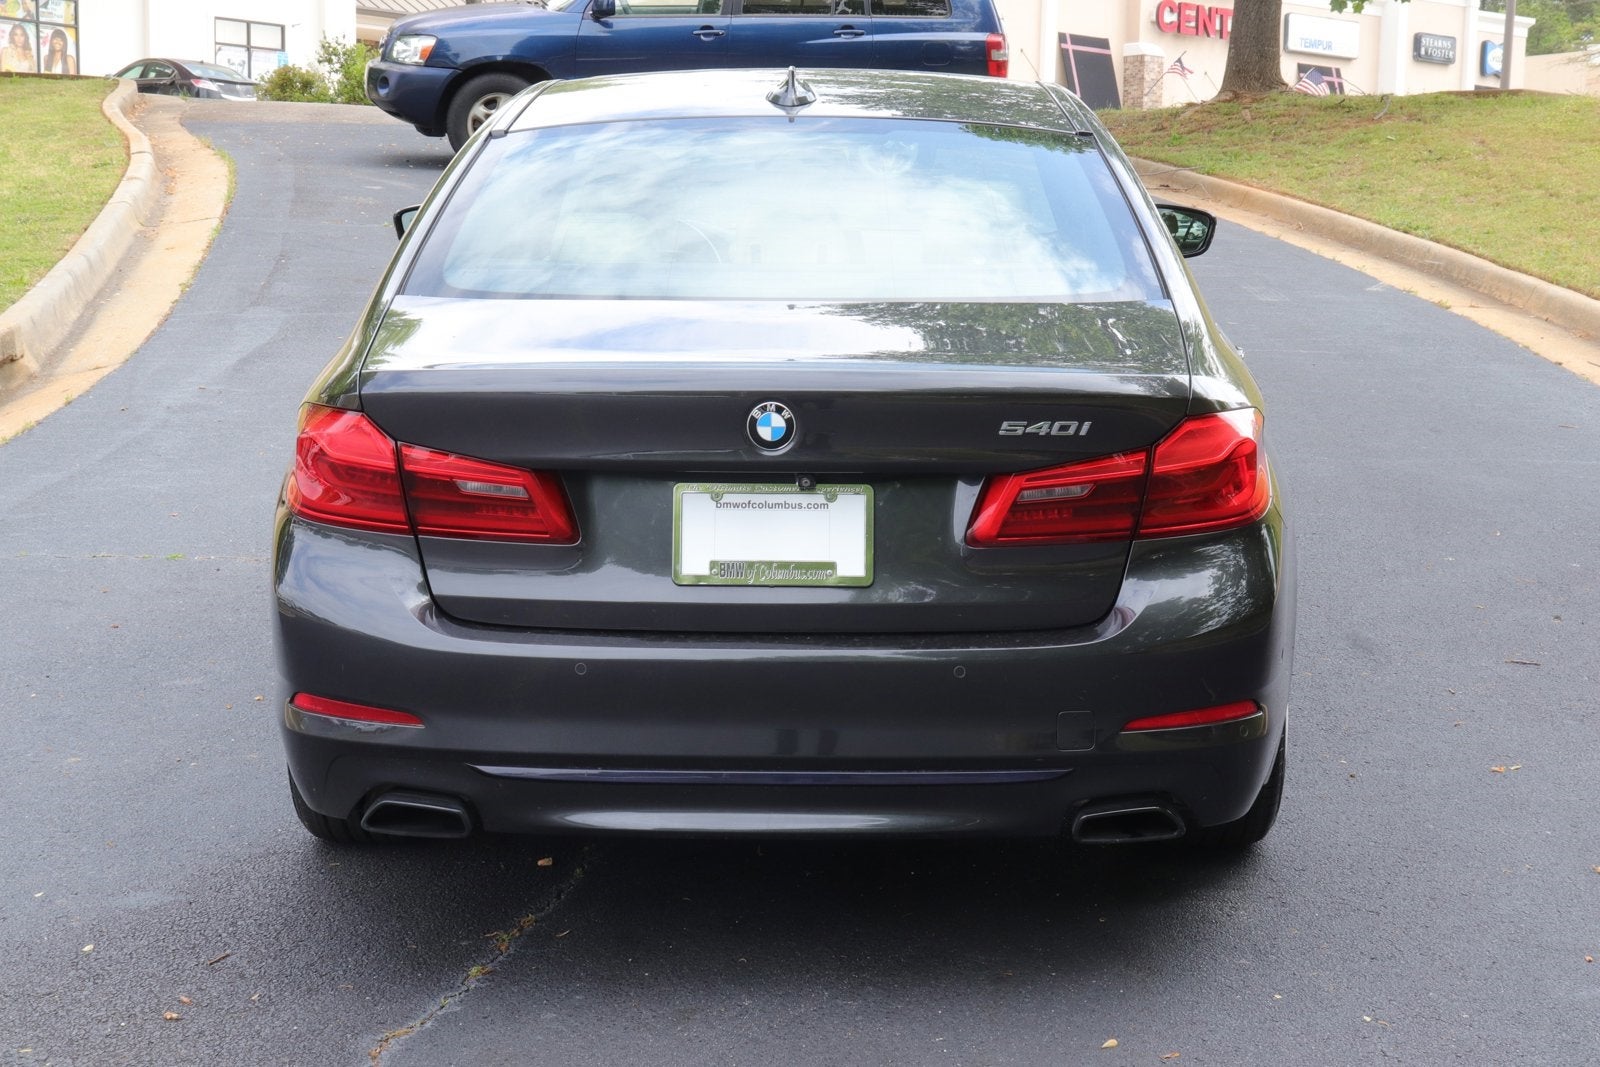 2018 BMW 5 Series 540i